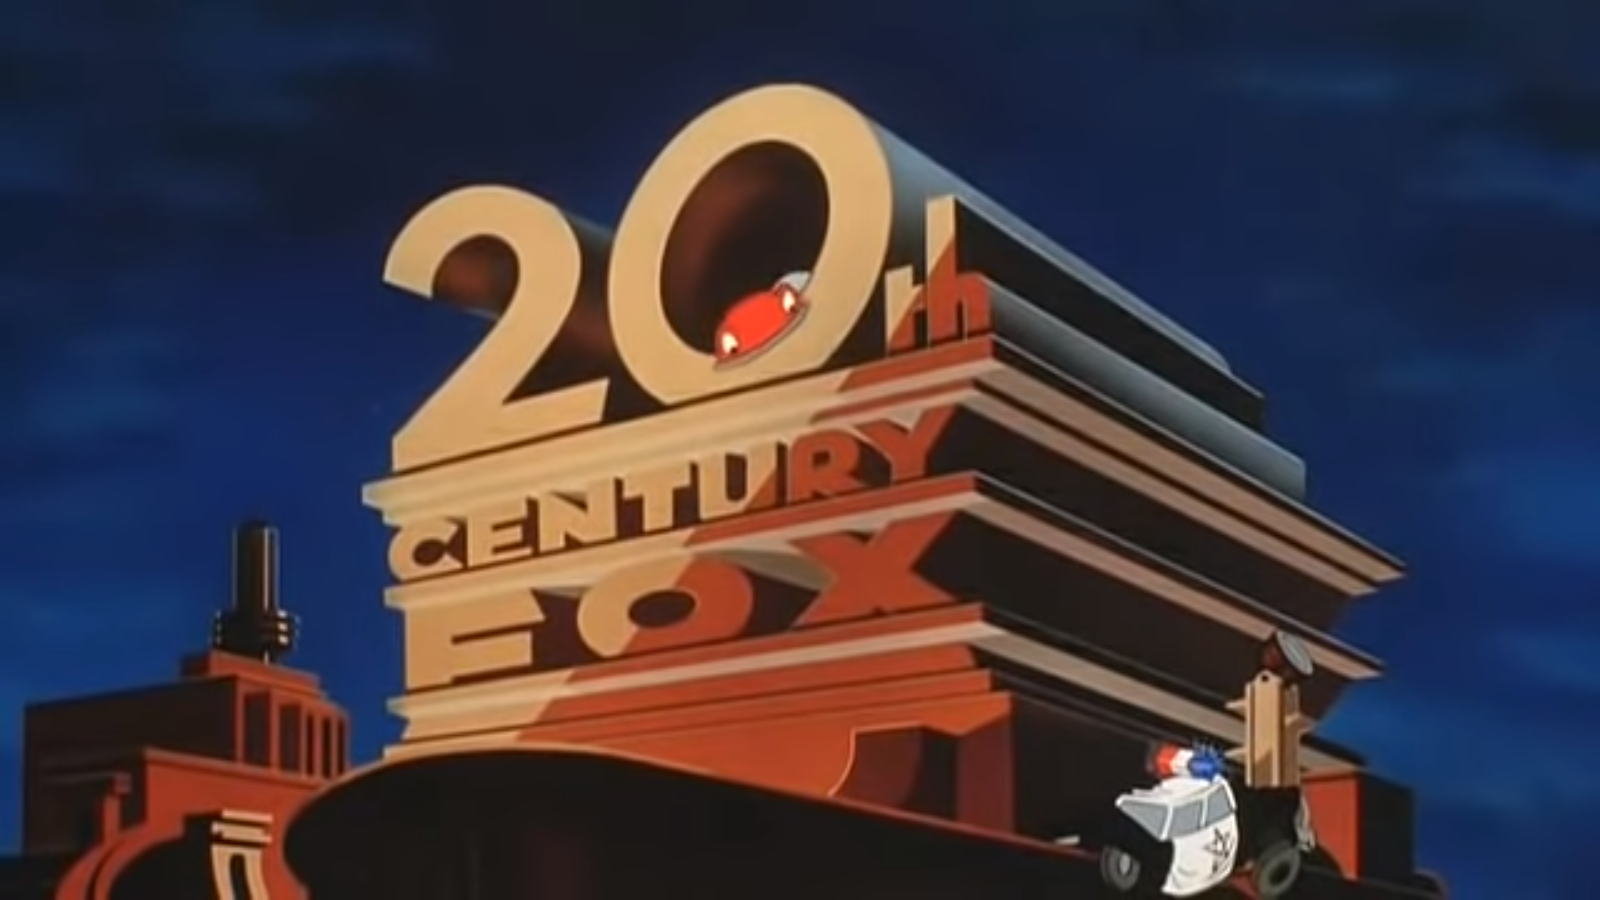 20th Century Fox (1981 CGI)